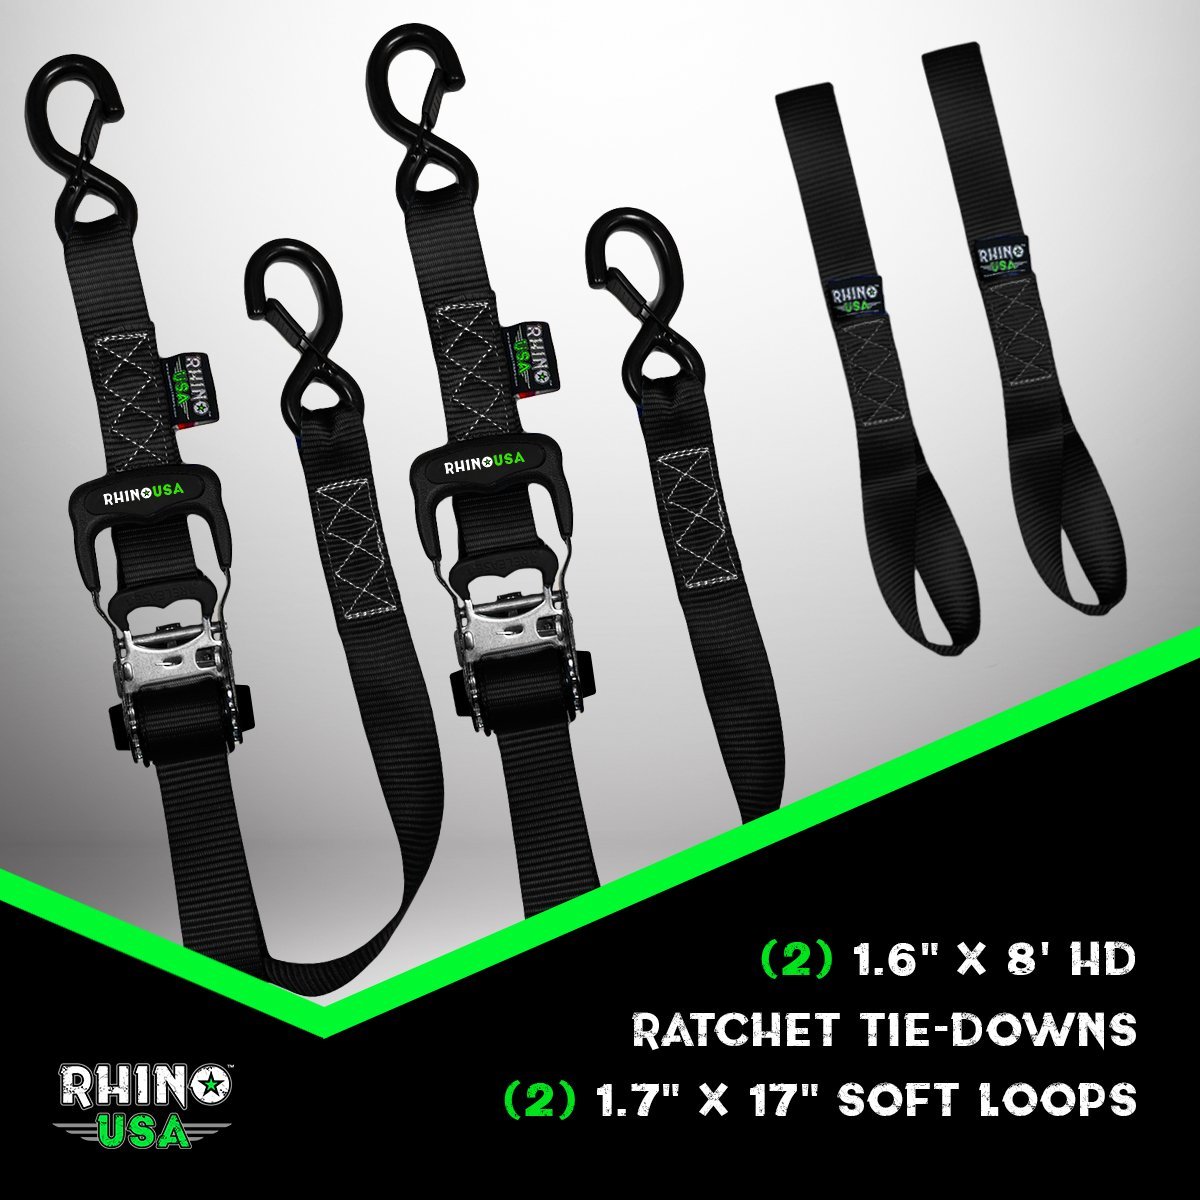 1.6" x 8' HD Ratchet Tie-Down Set (2-Pack) Tie-Down Straps Rhino USA, Inc. 